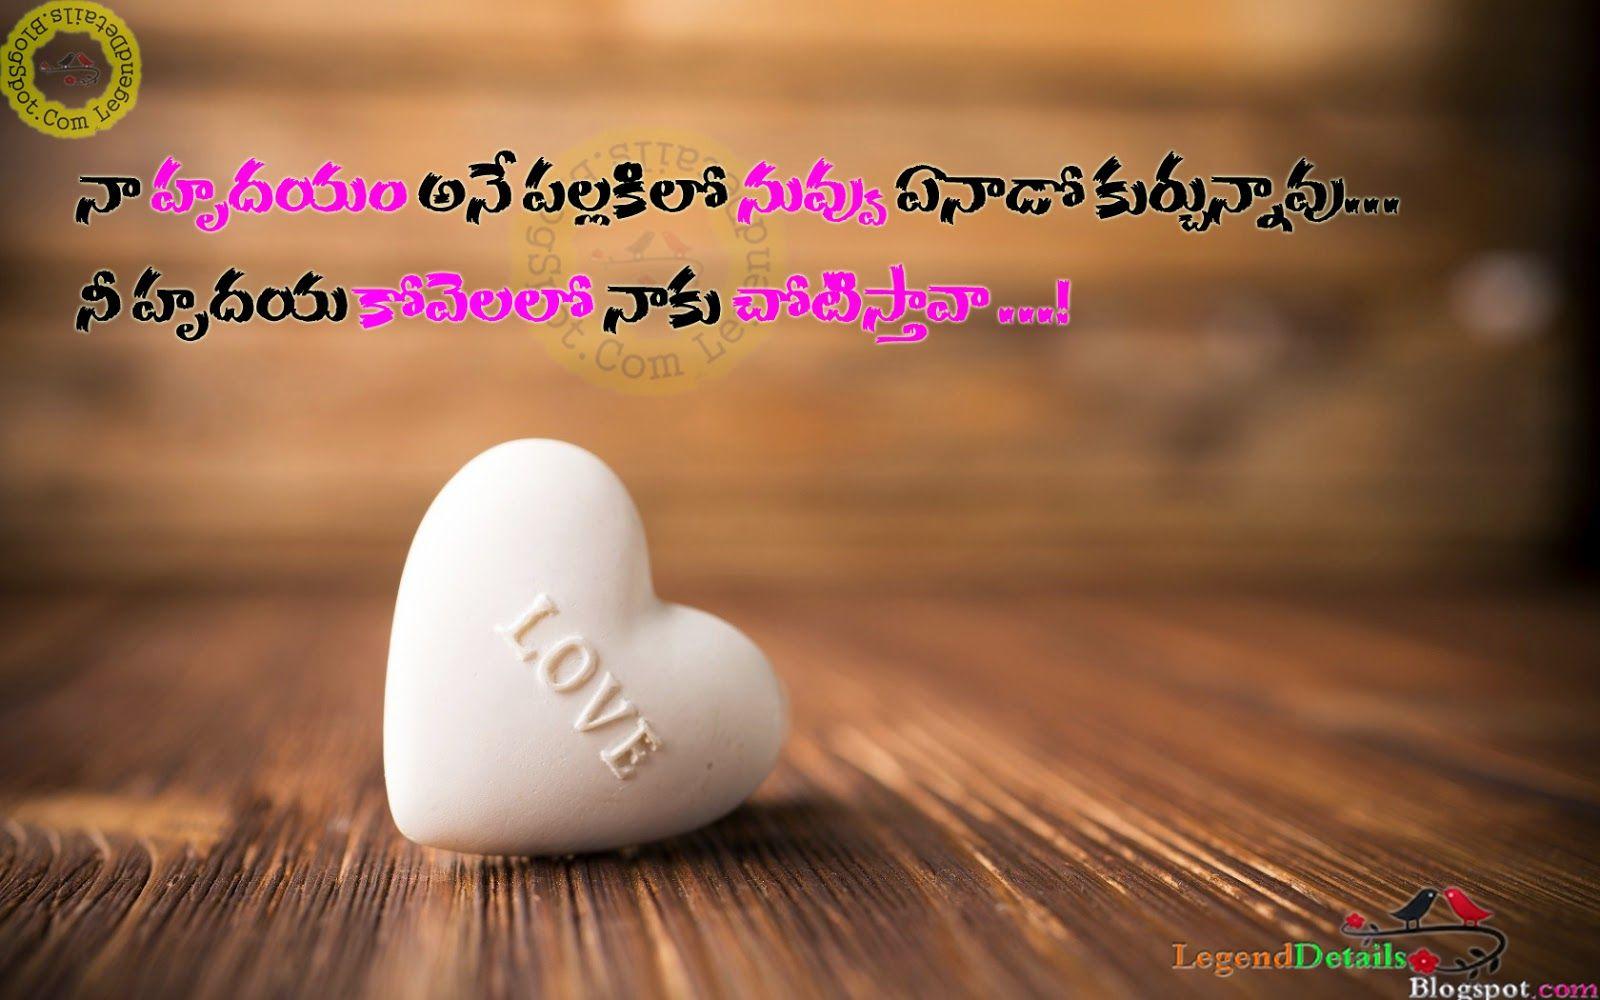 Telugu Love sms with HD Image. Heart Touching Telugu Love